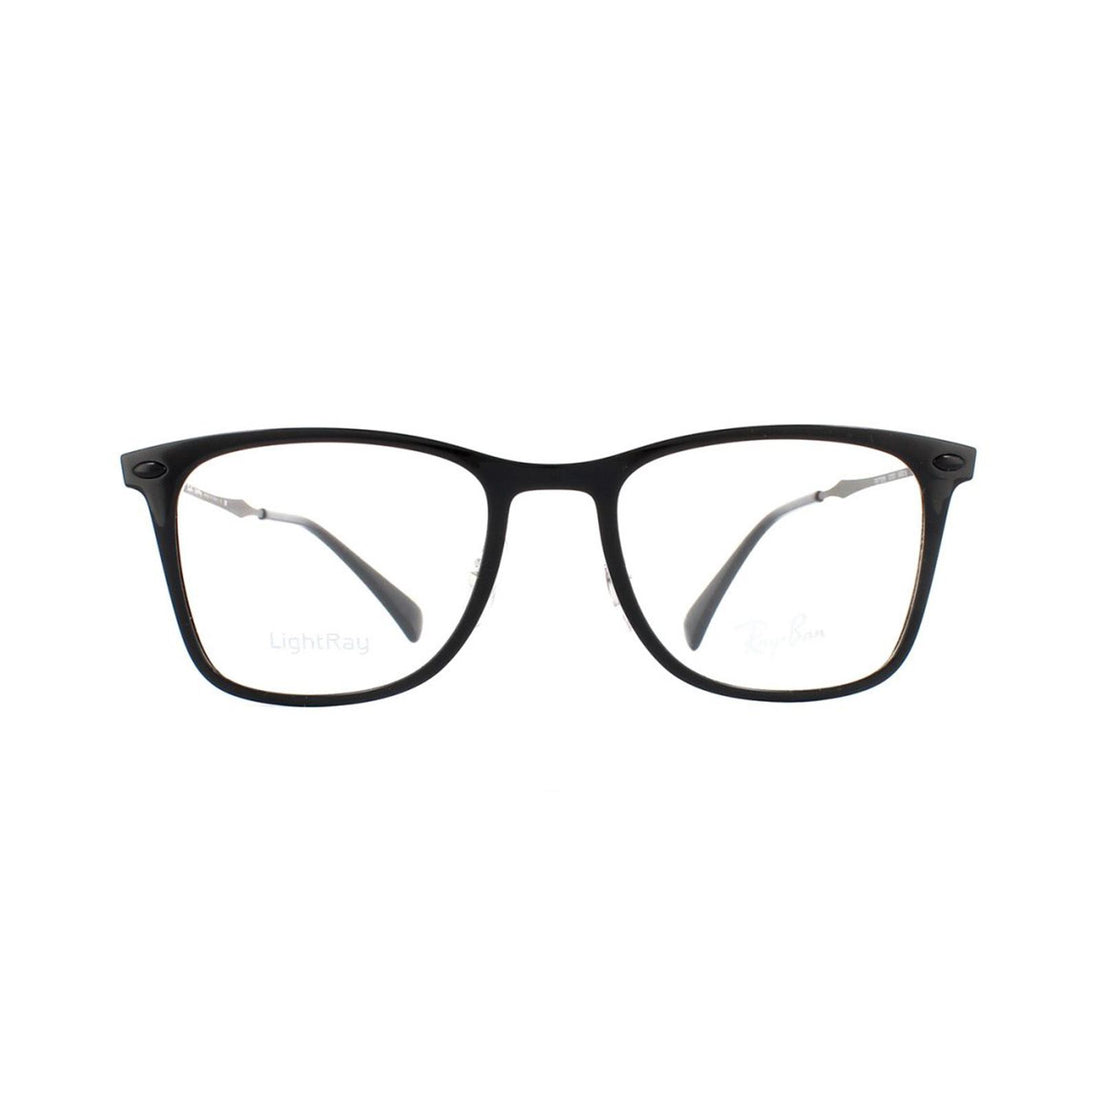 Ray-Ban 7086 Glasses Frames